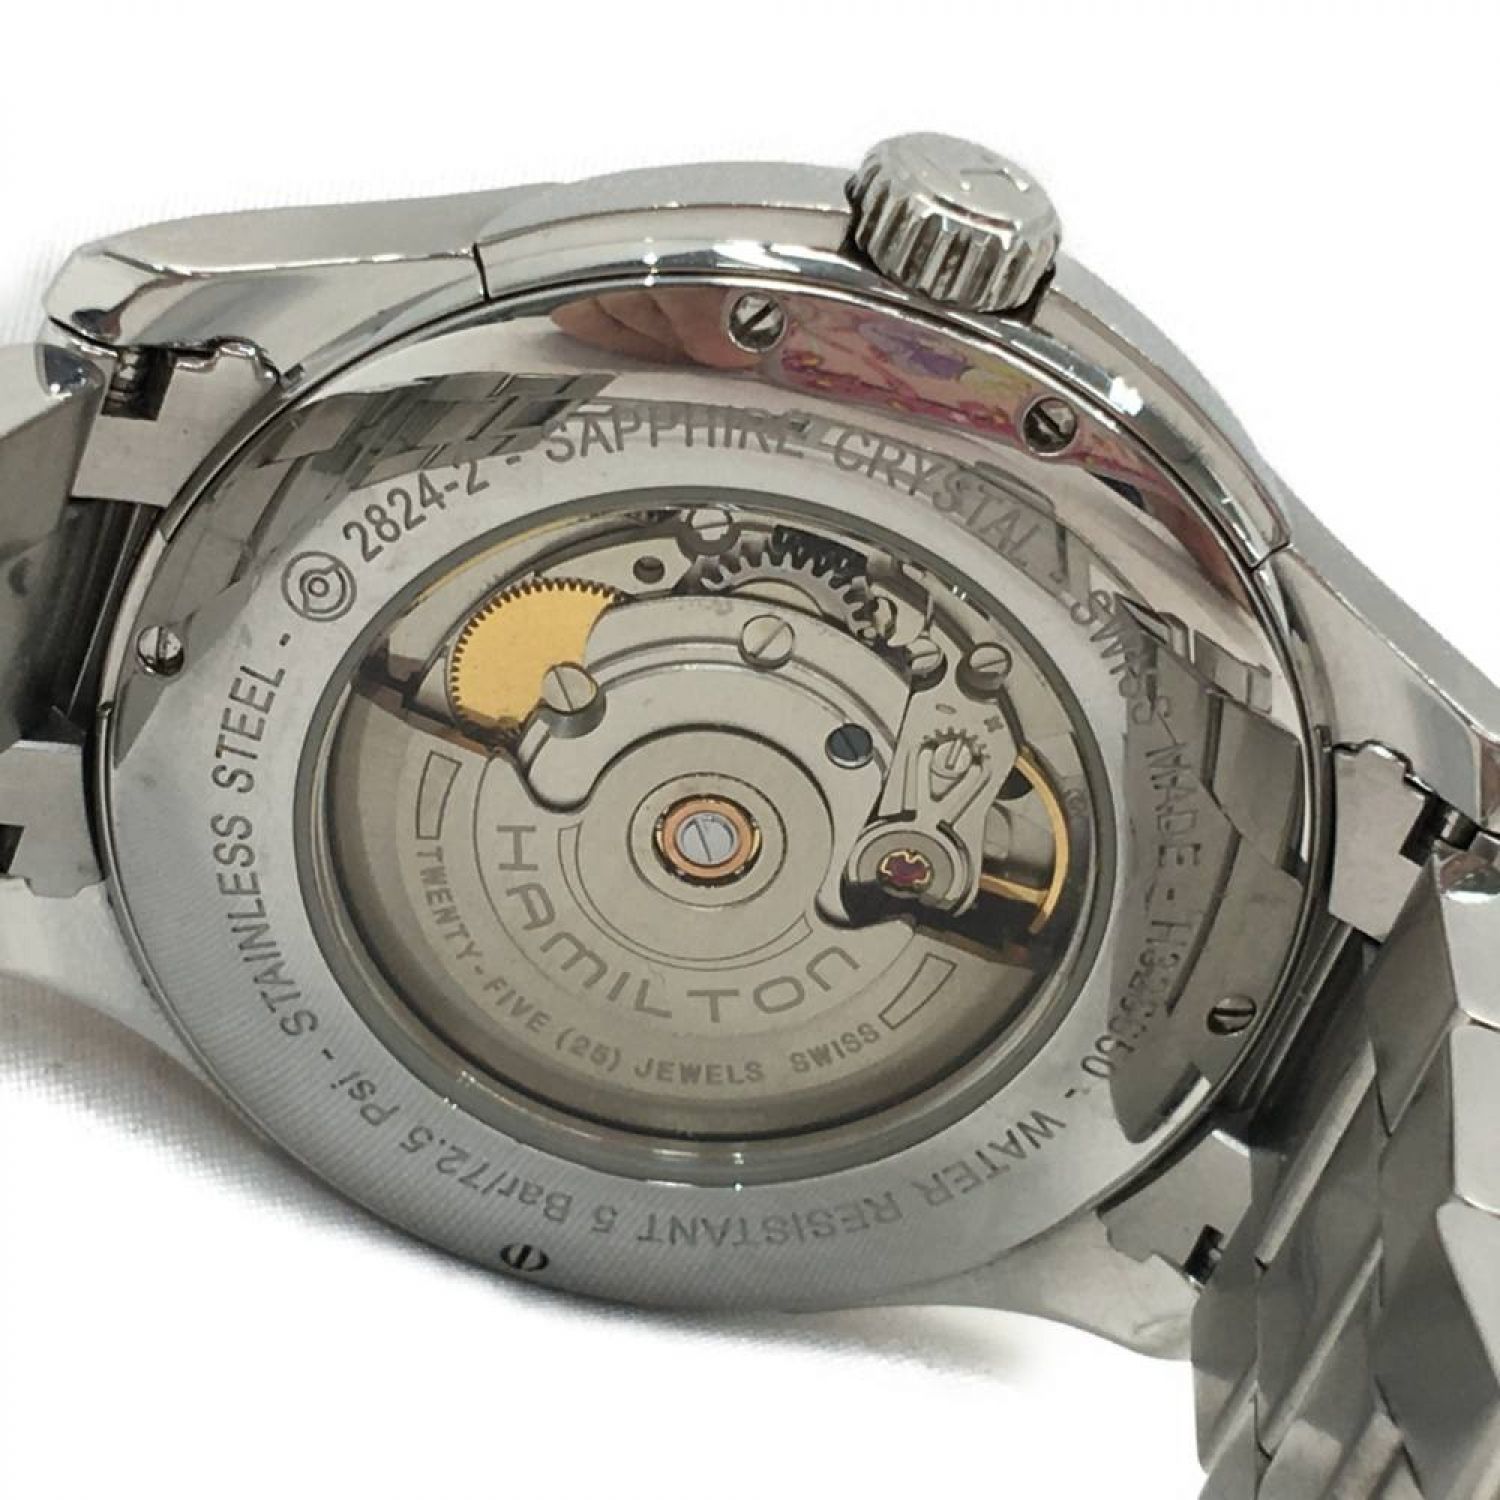 ▼▼HAMILTON ハミルトン メンズ腕時計 自動巻き ジャズマスター H326650